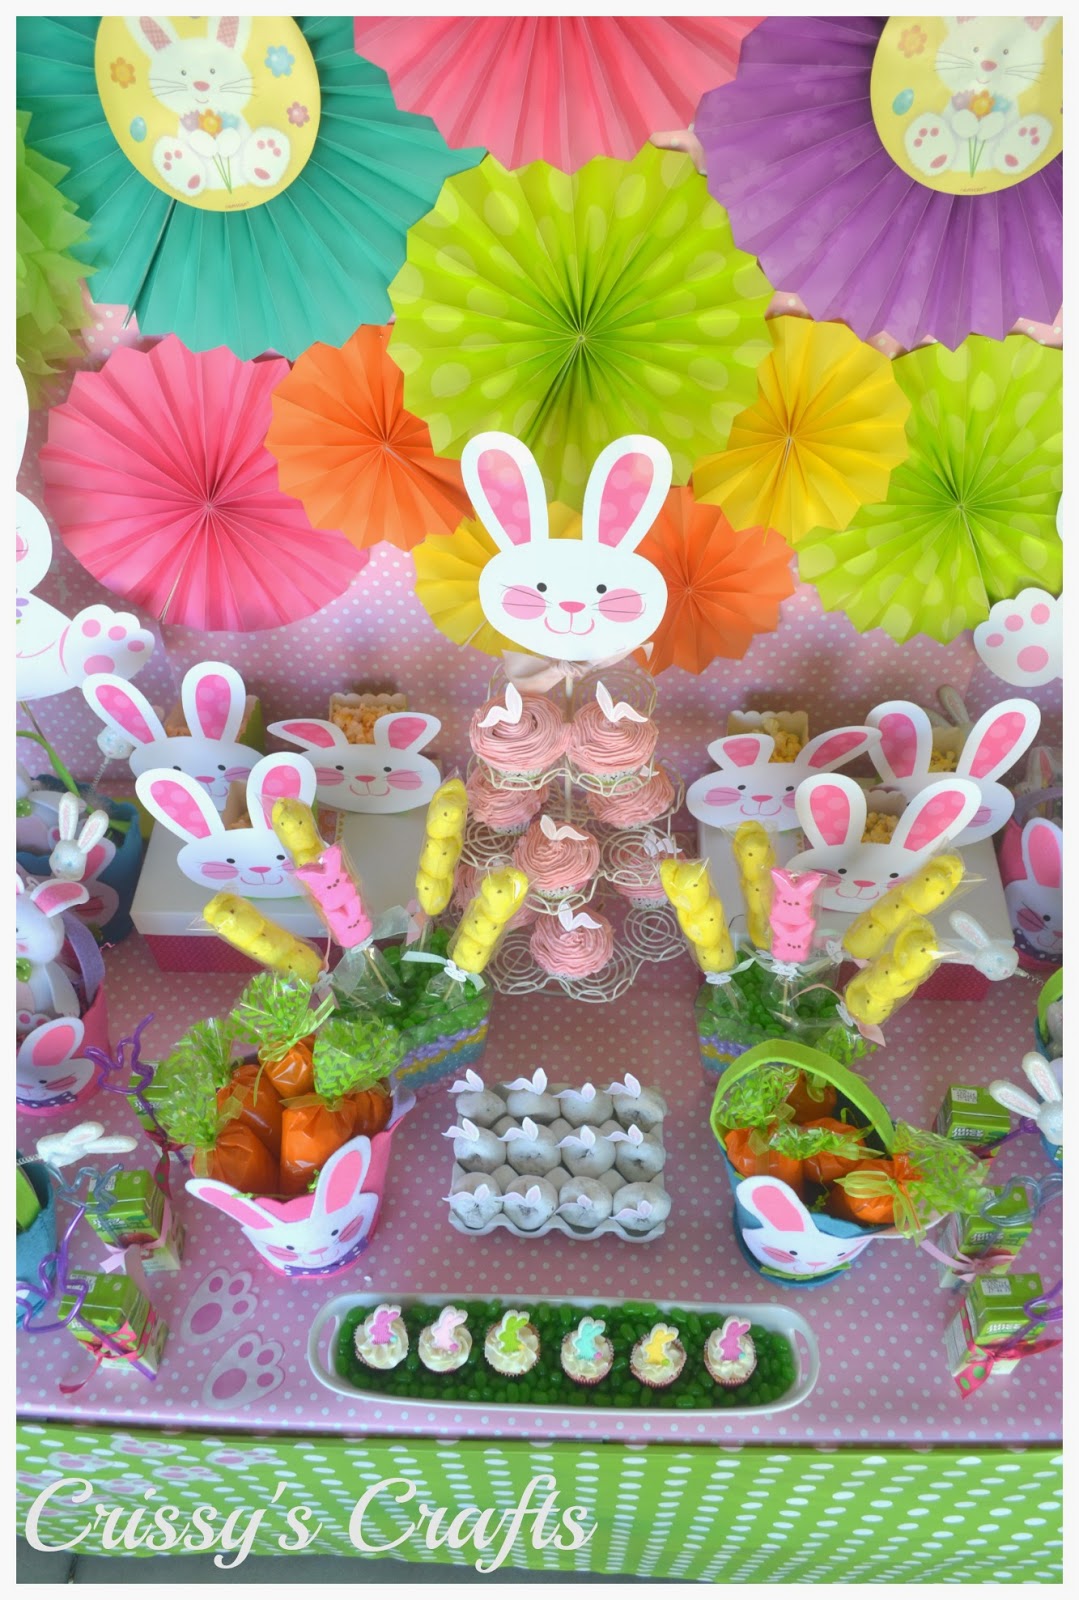 Crissy's Crafts: Spring/Easter Celebration Ideas